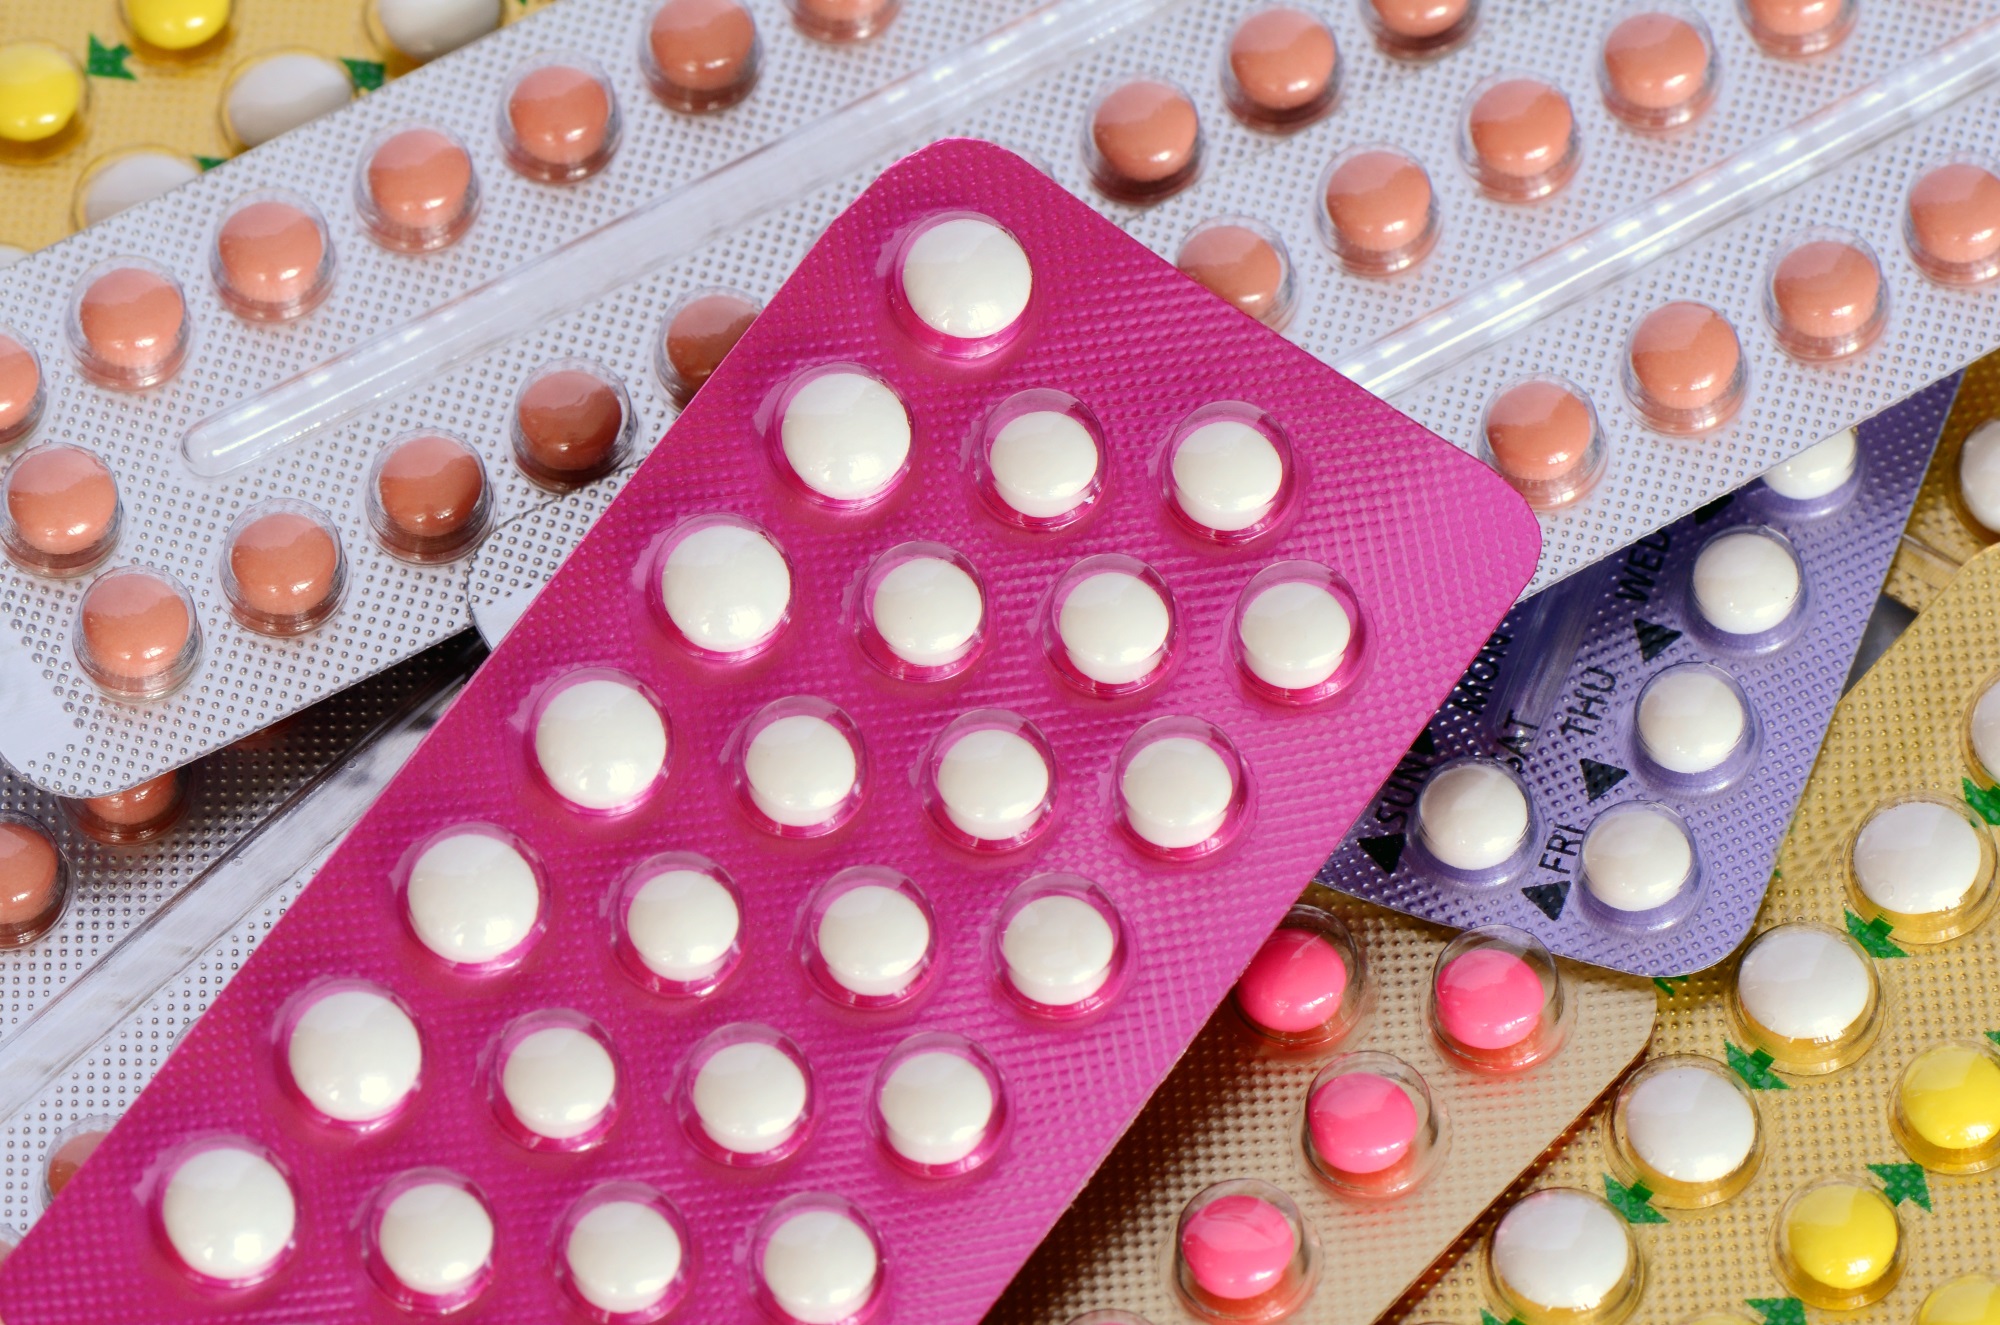 La pilule en continu - Contraception - Doctissimo